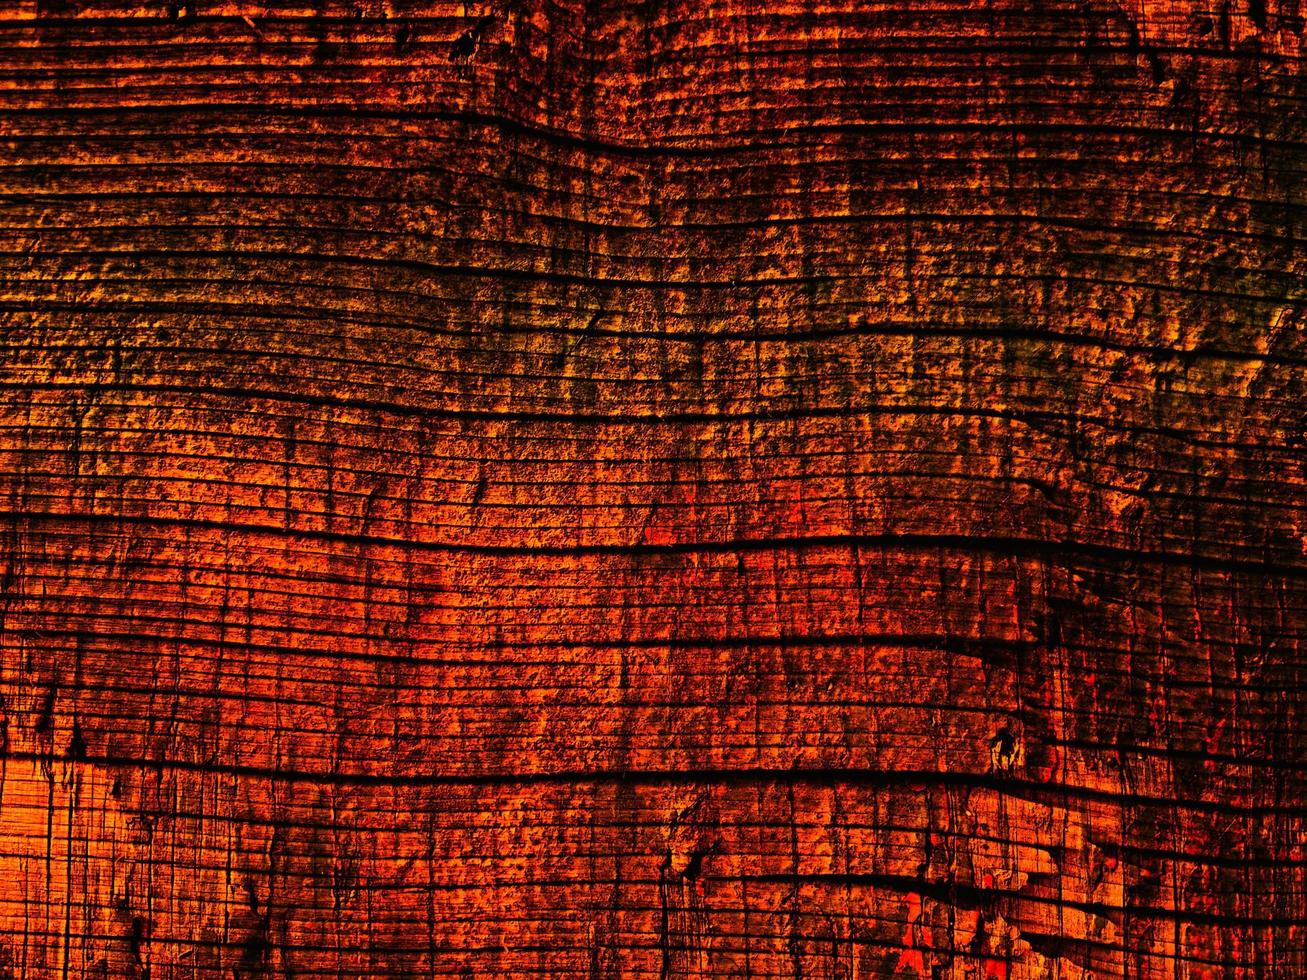 texture bois orange photo